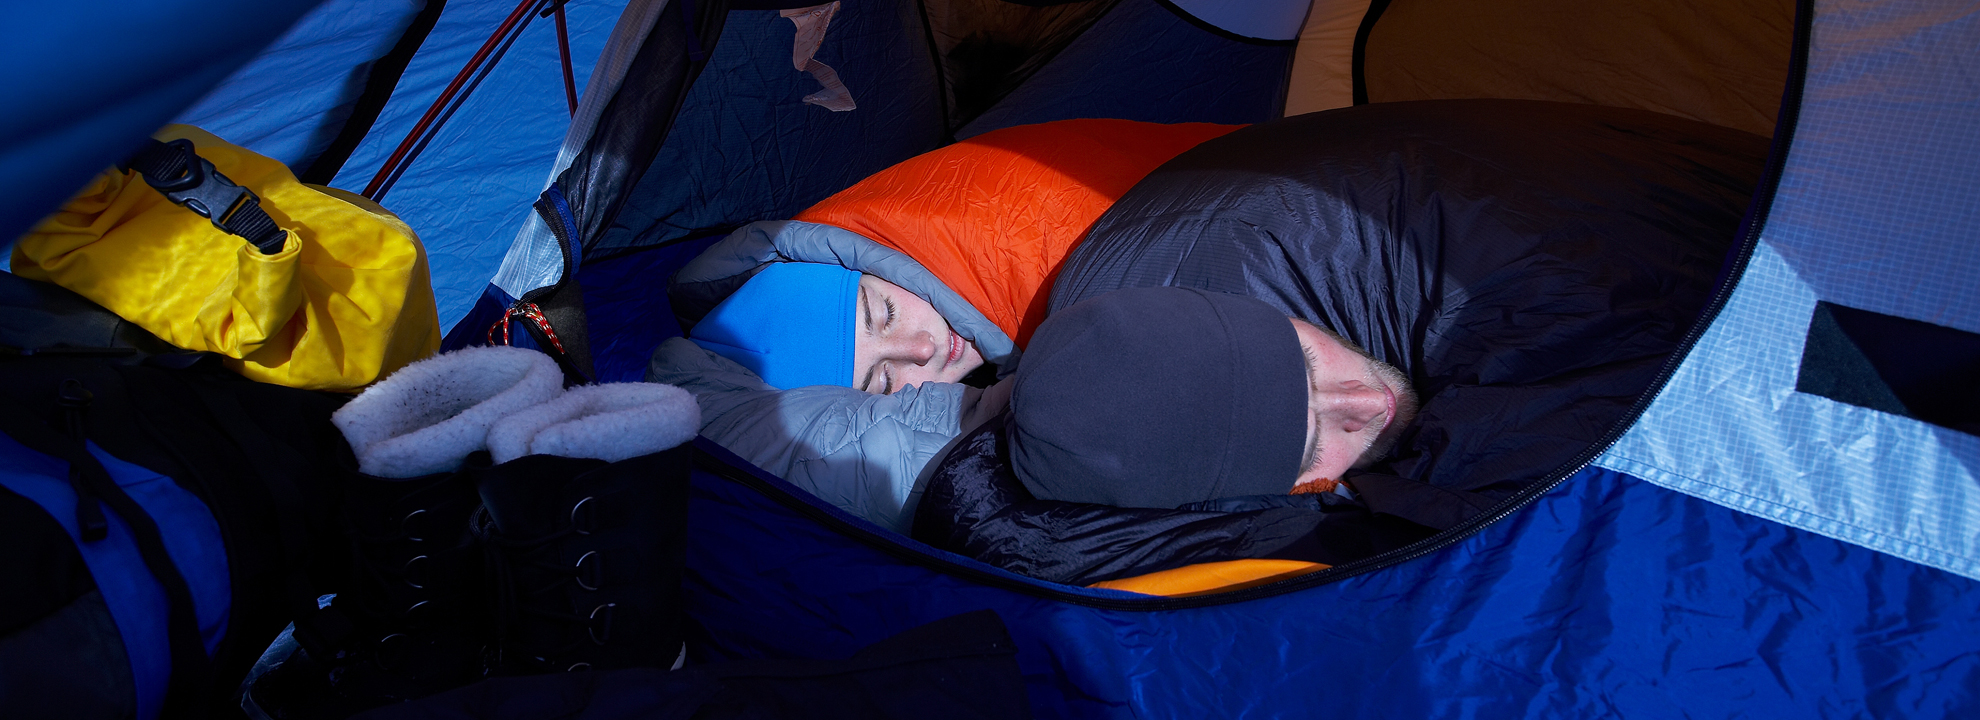 Fascinar Impotencia compañero Guía para elegir tu saco de dormir (ACTUALIZADO 2020) - Blog de Montaña de  Forum Sport